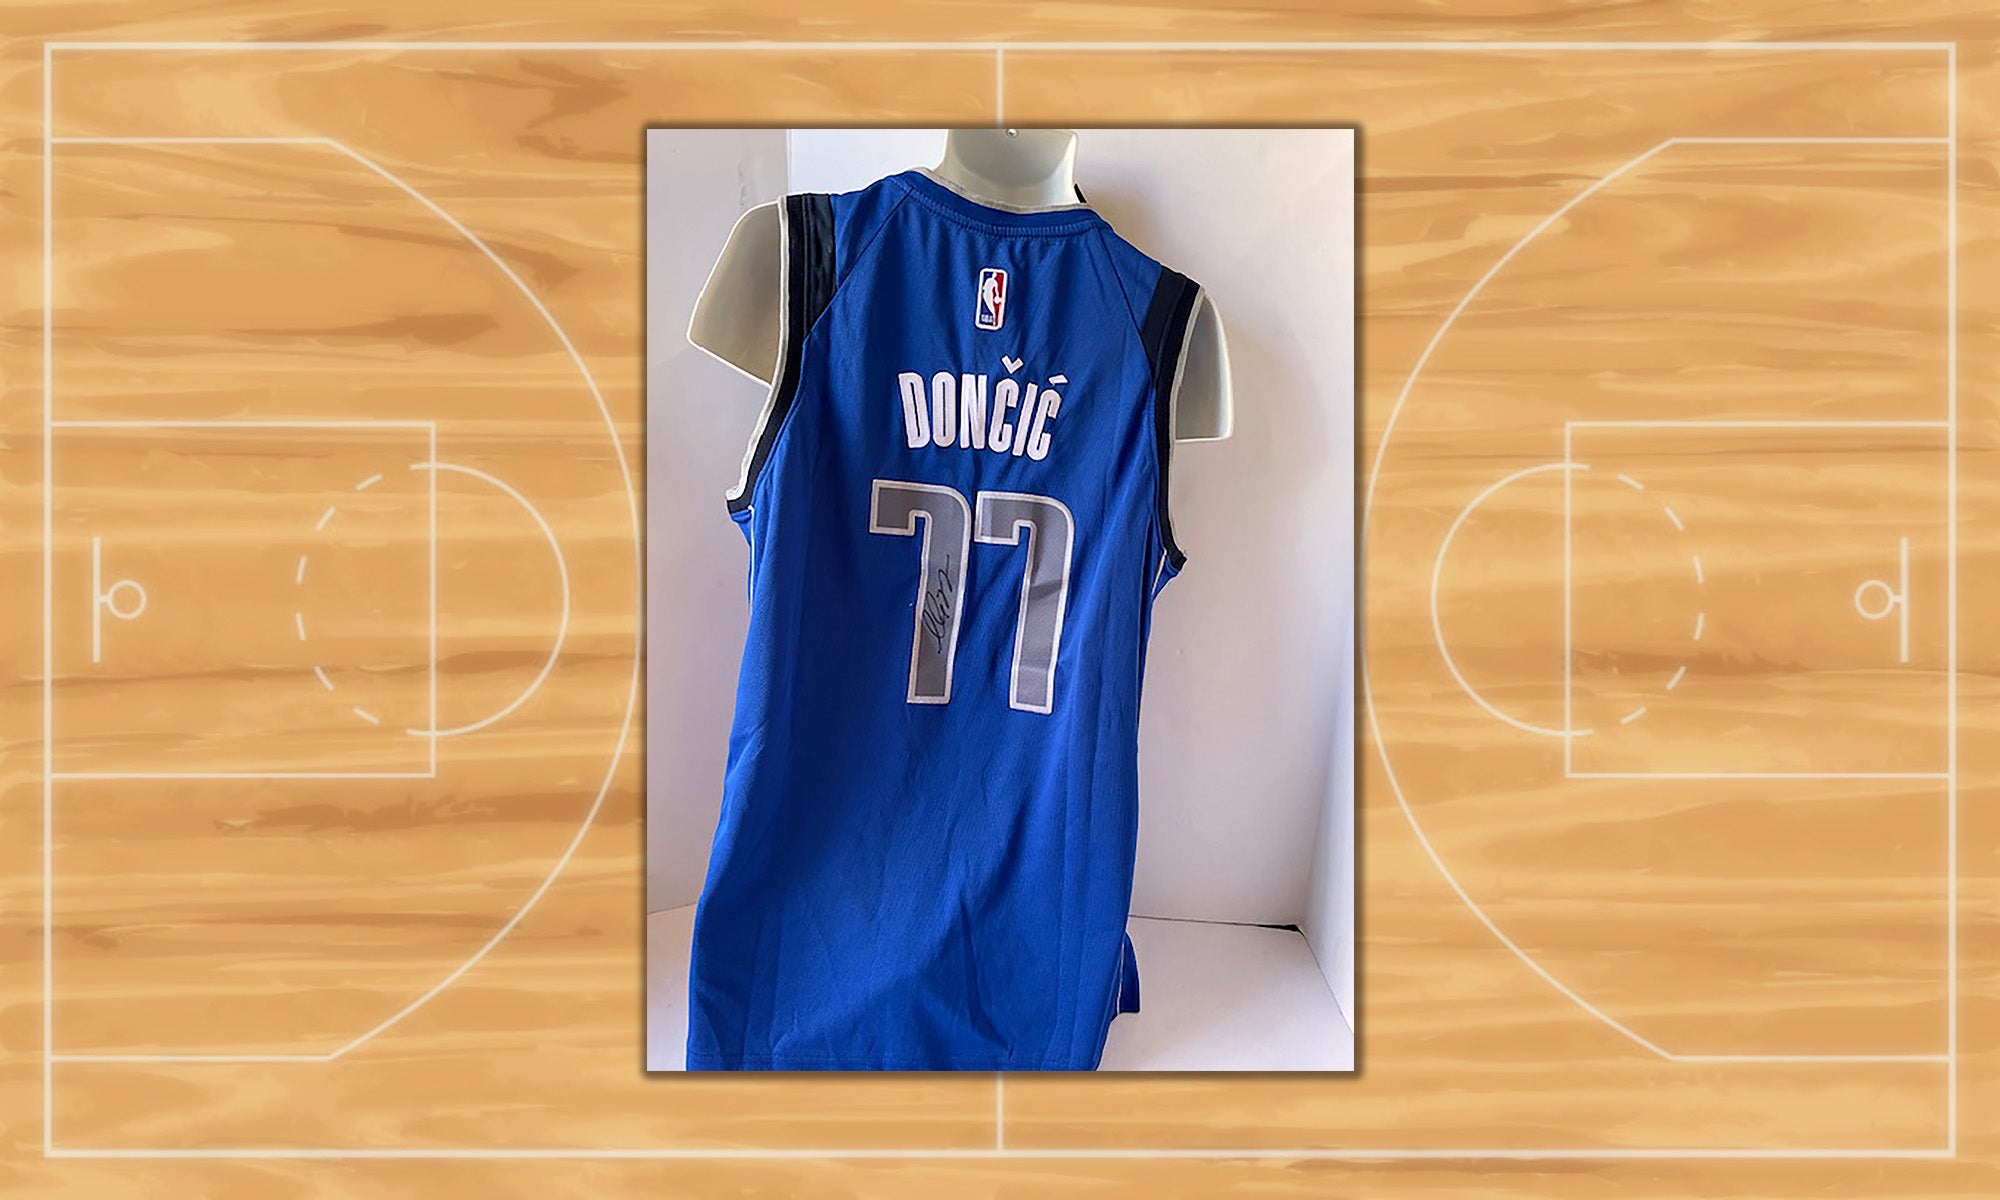 Luka Doncic Autographed and Framed Dallas Mavericks Jersey